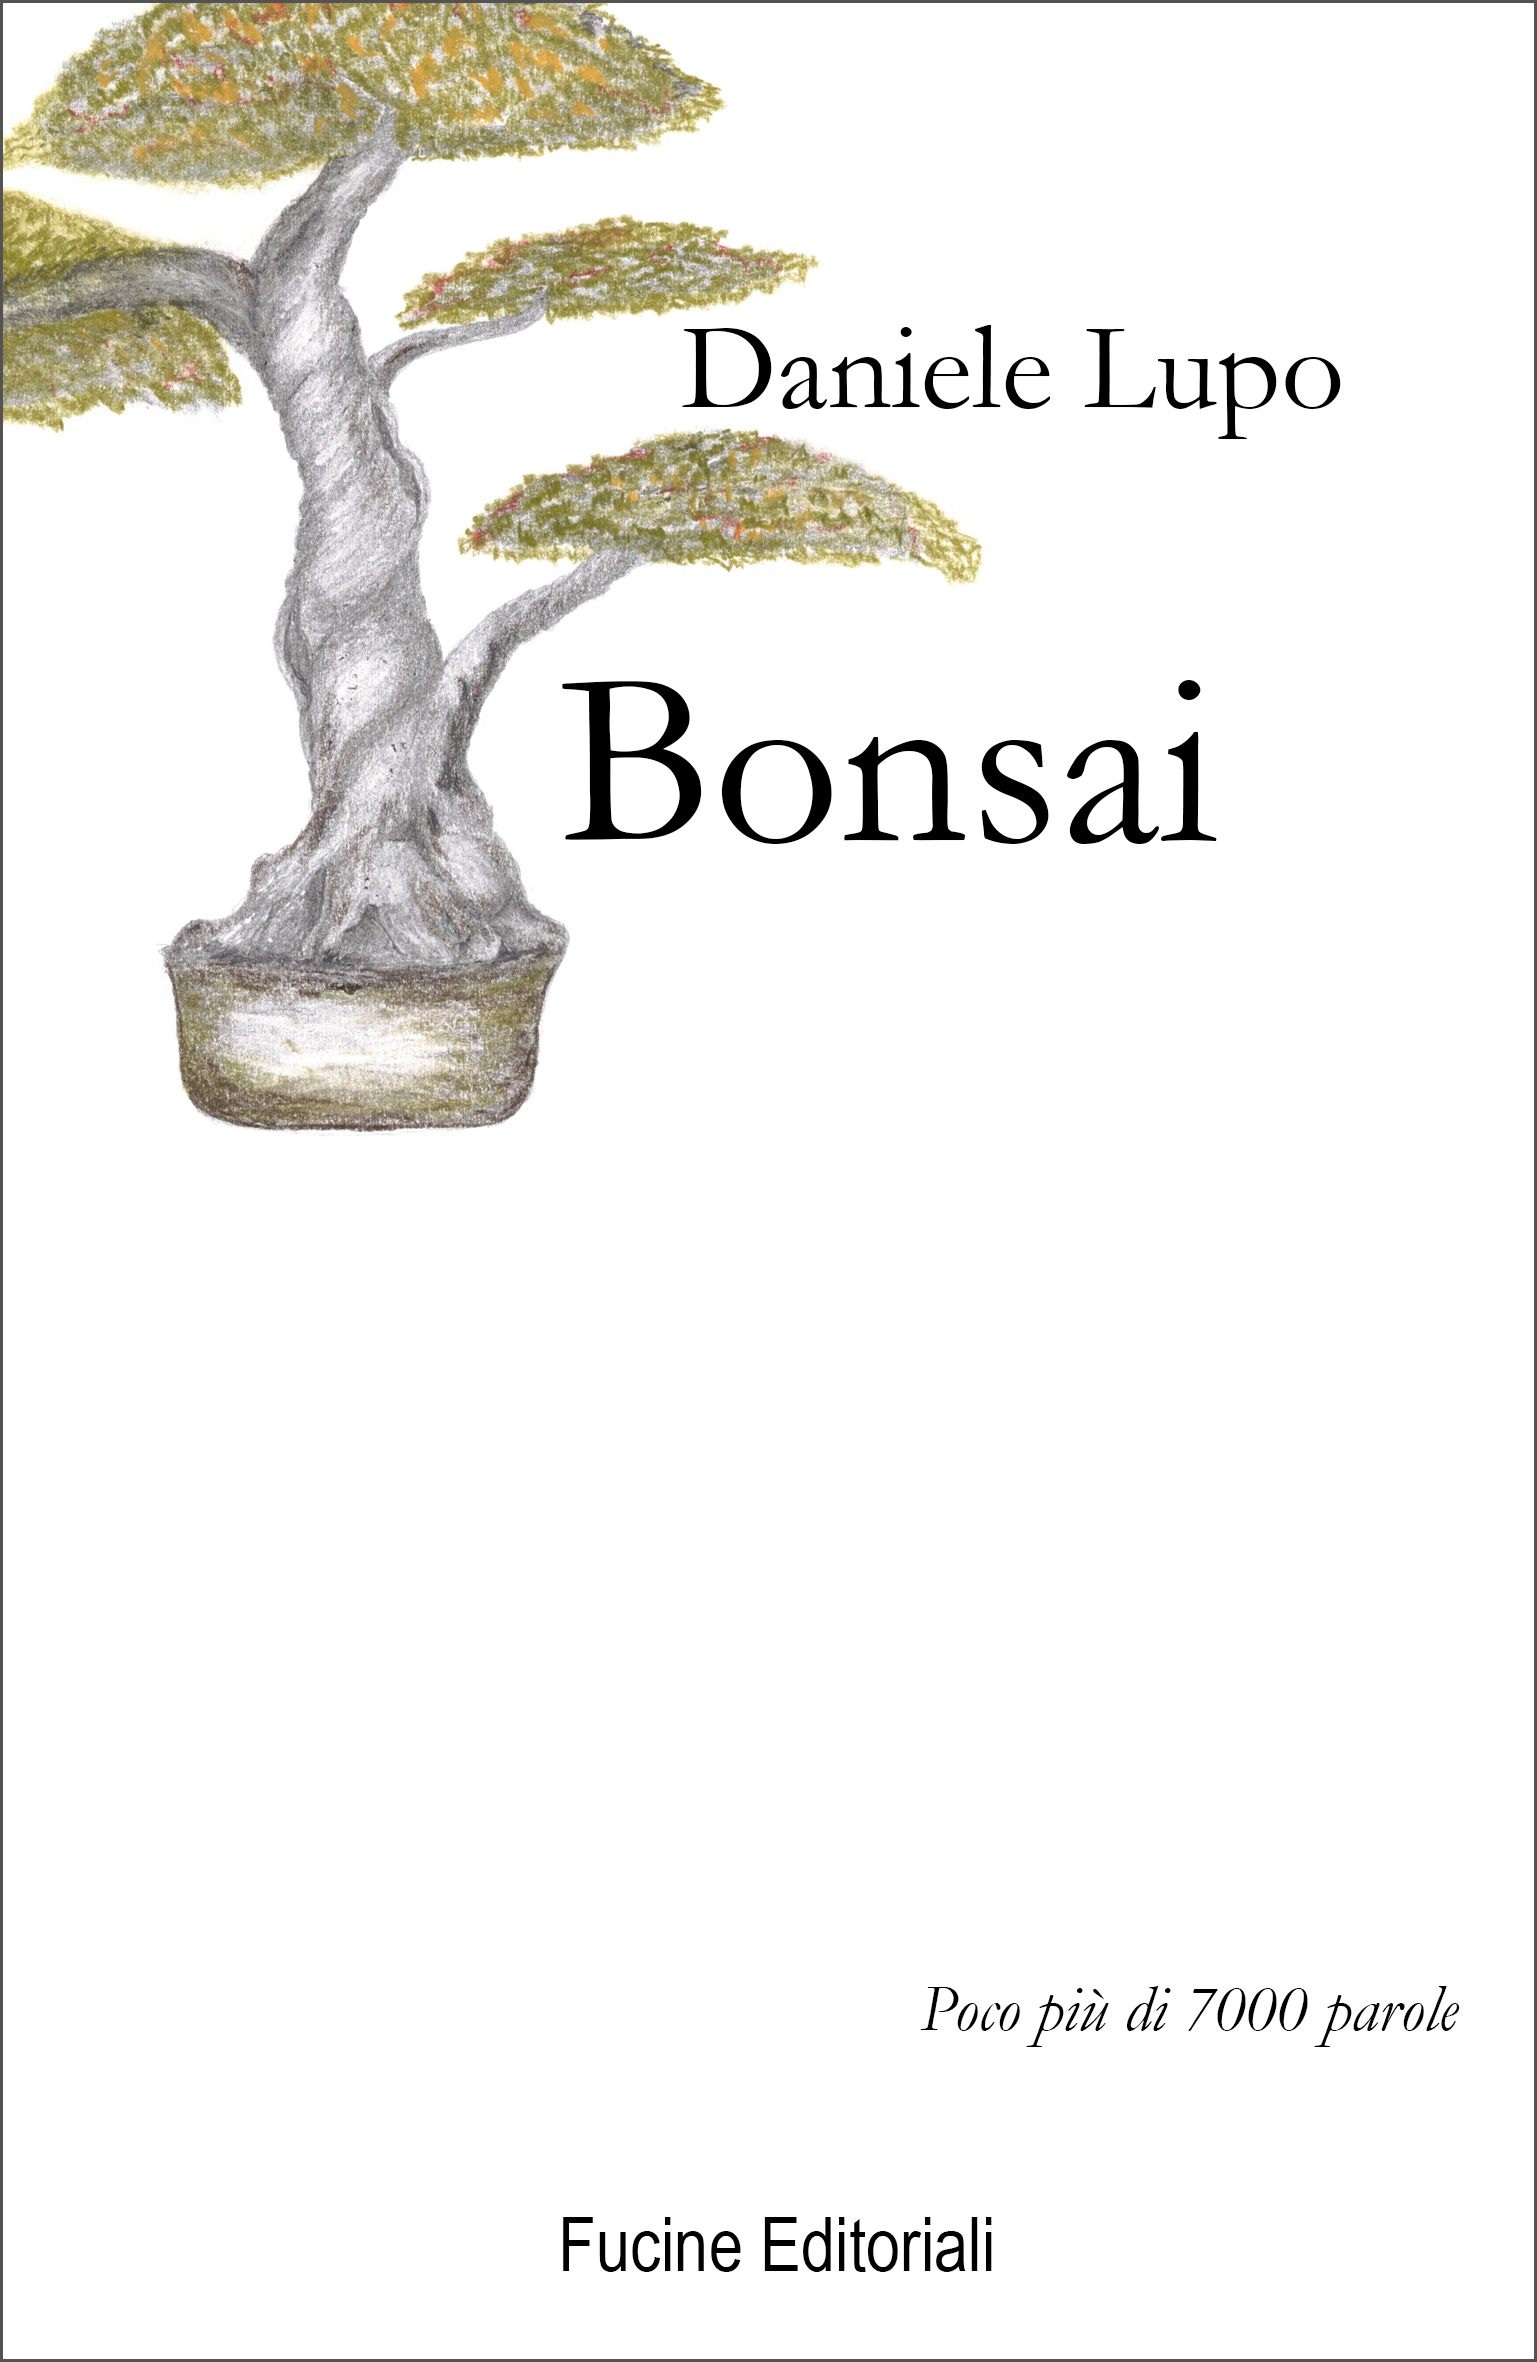 Bonsai, Daniele Lupo, Fucine Editoriali